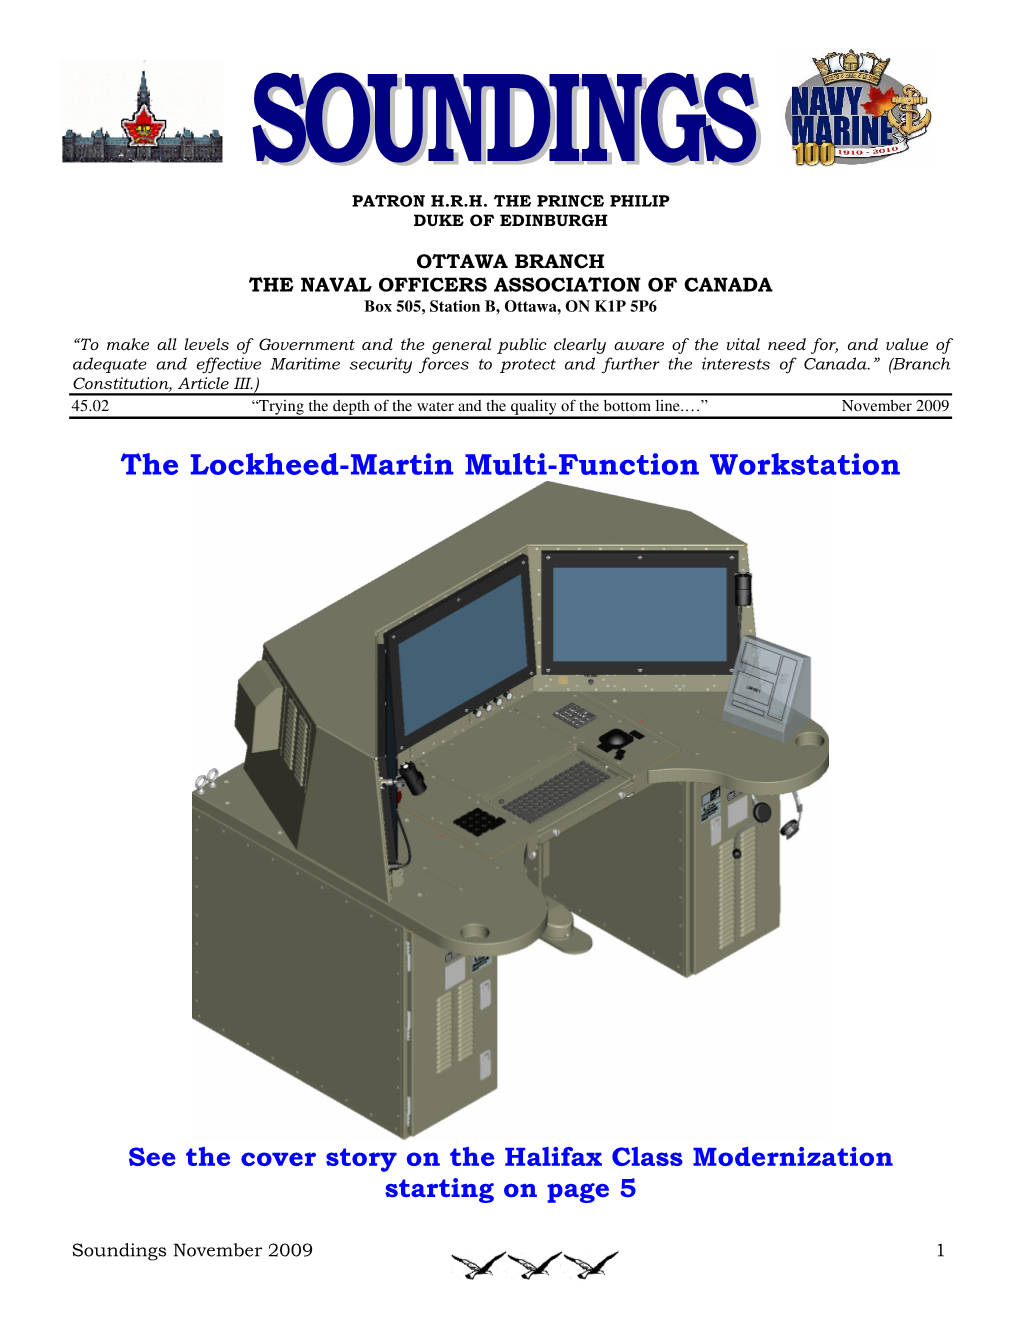 The Lockheed-Martin Multi-Function Workstation